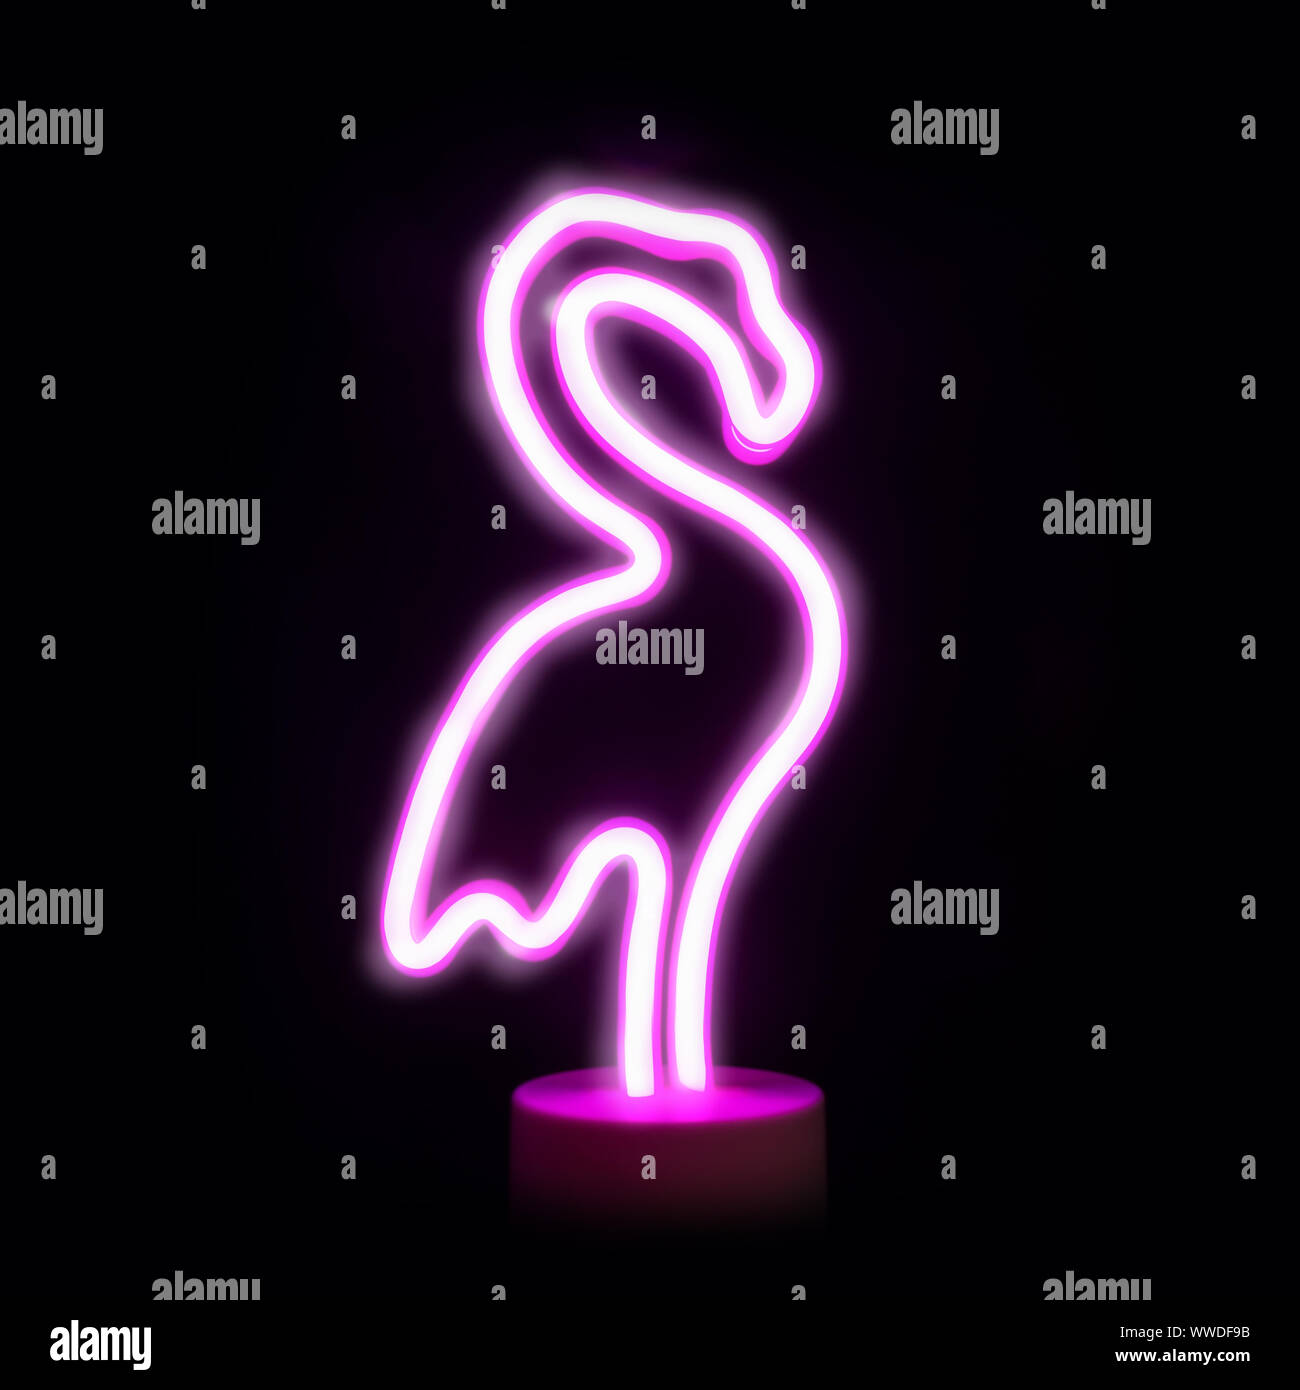 Neon pink flamingo LED lamp isolated on black background. Children's modern night light. Square image. Stock Photo